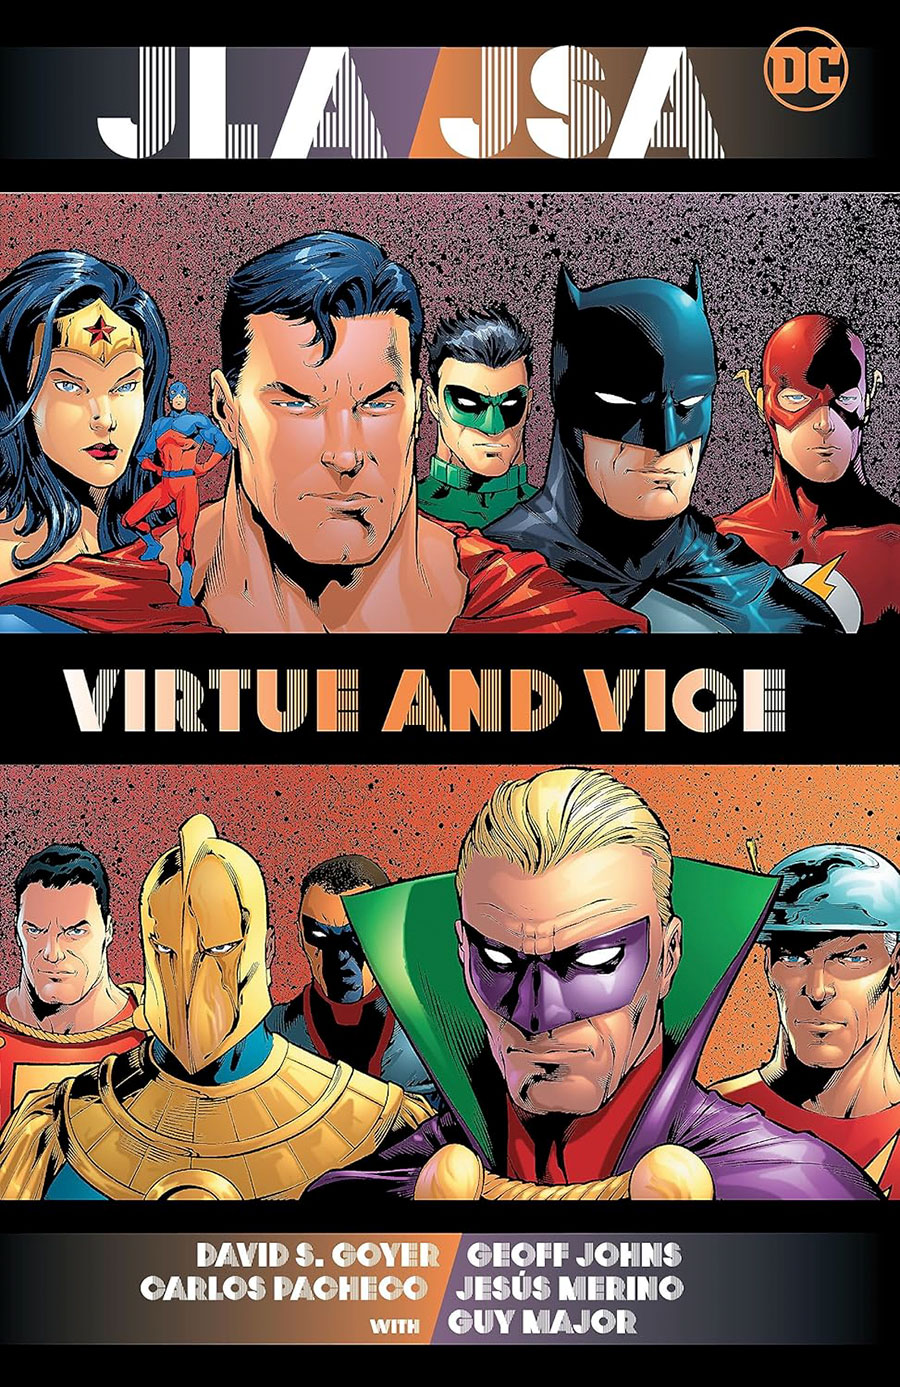 JLA JSA Virtue And Vice TP (2023 Edition)